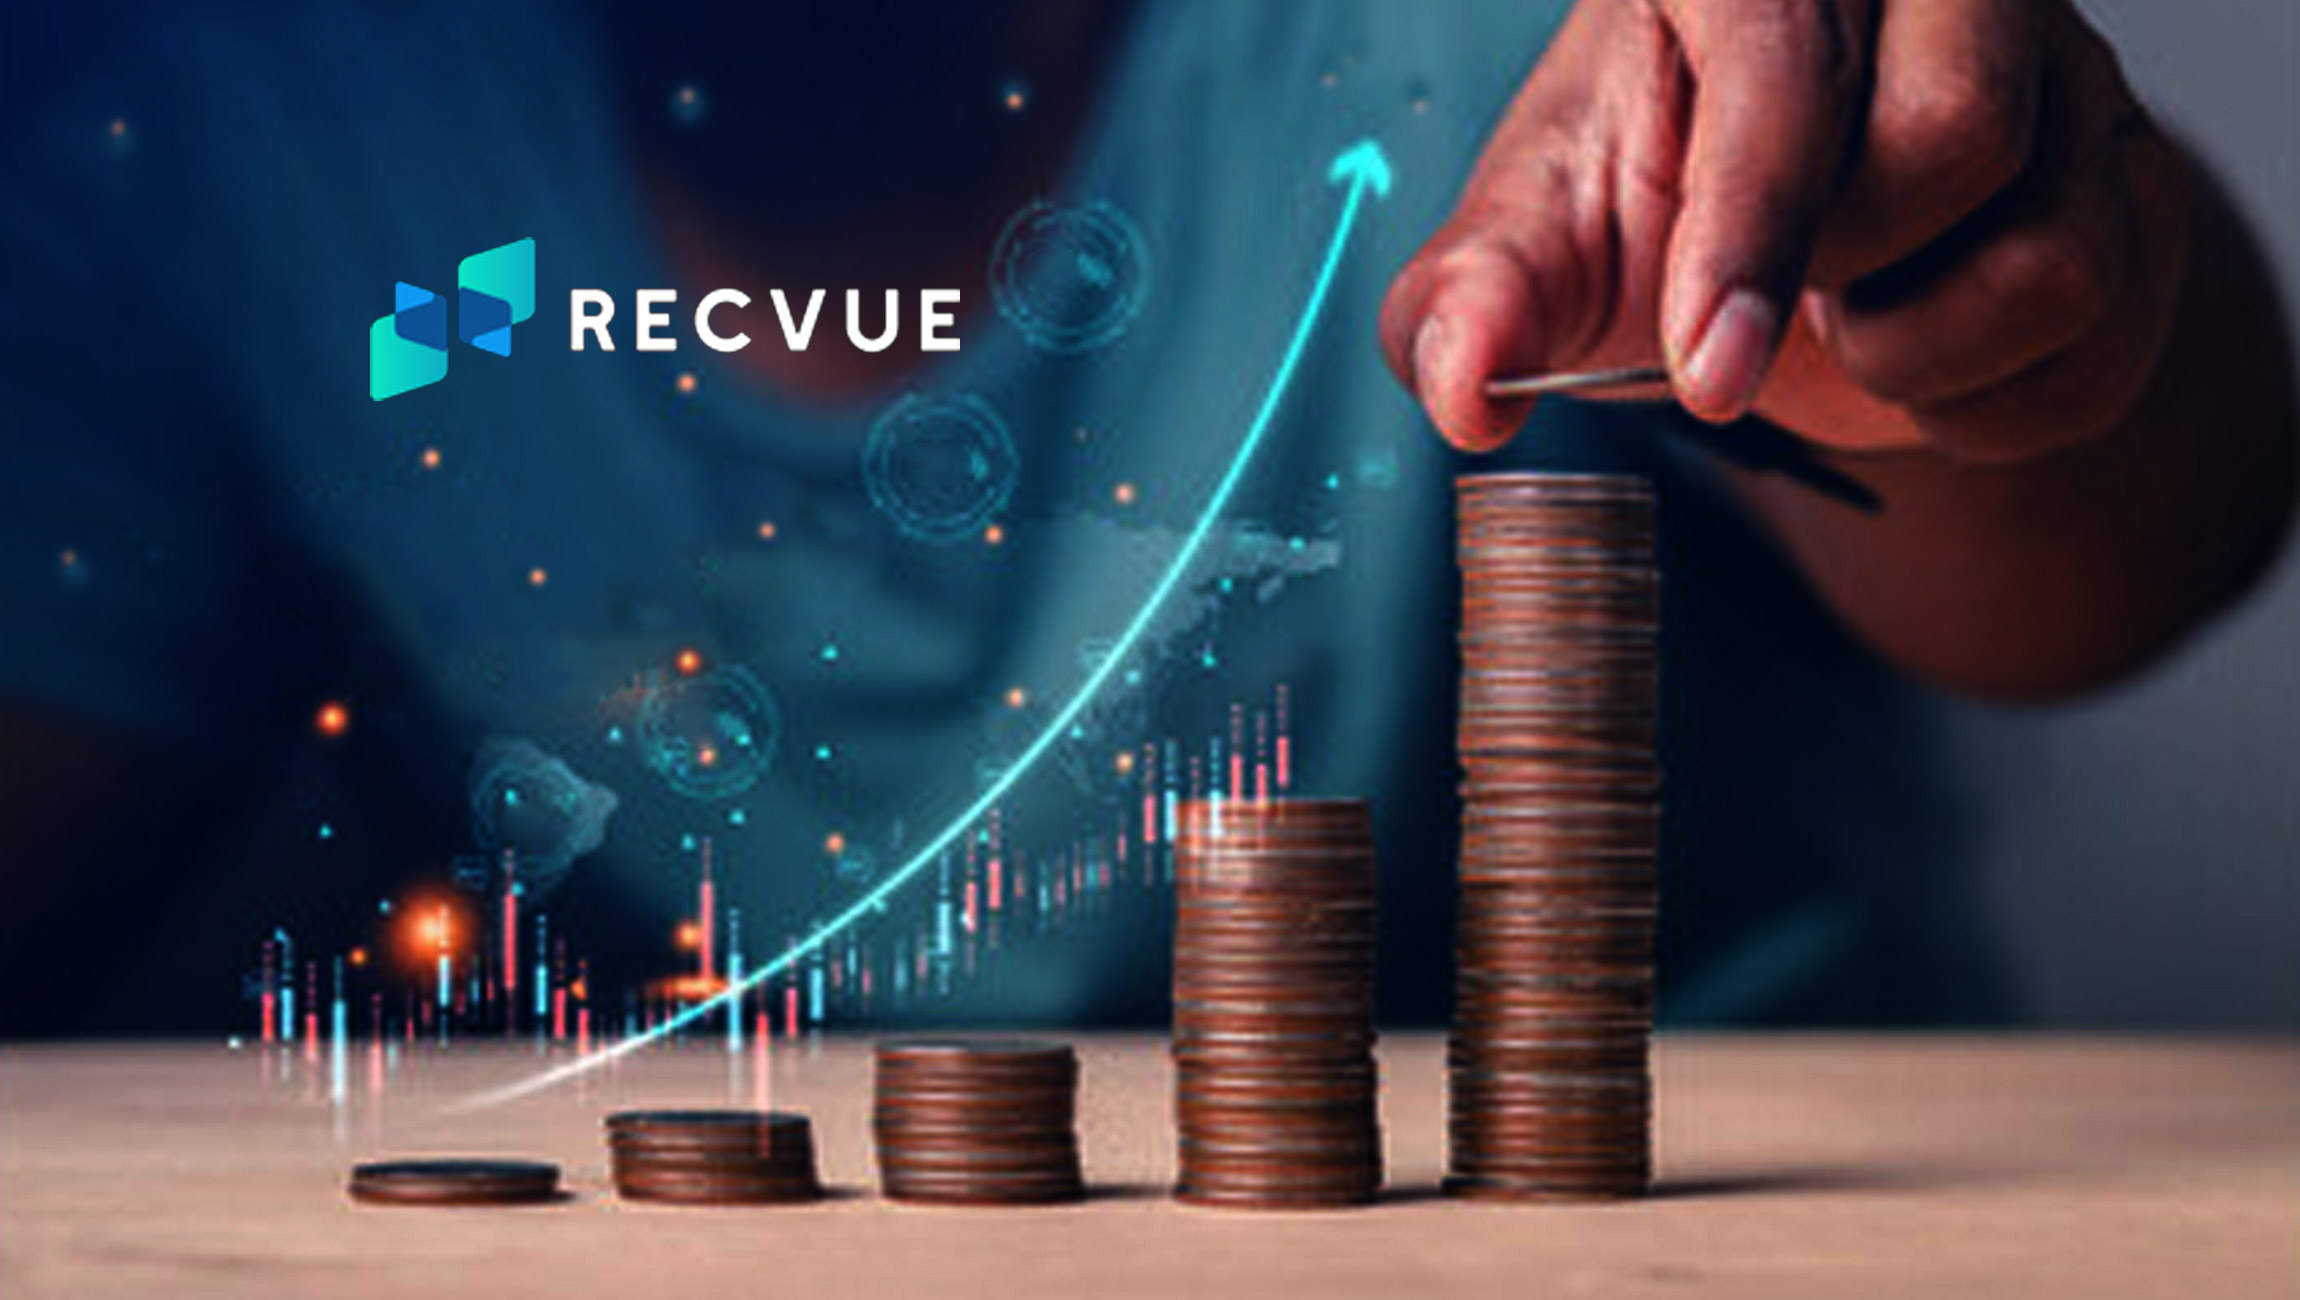 RecVue Achieves Milestone Revenue Under Management with agile monetization platform